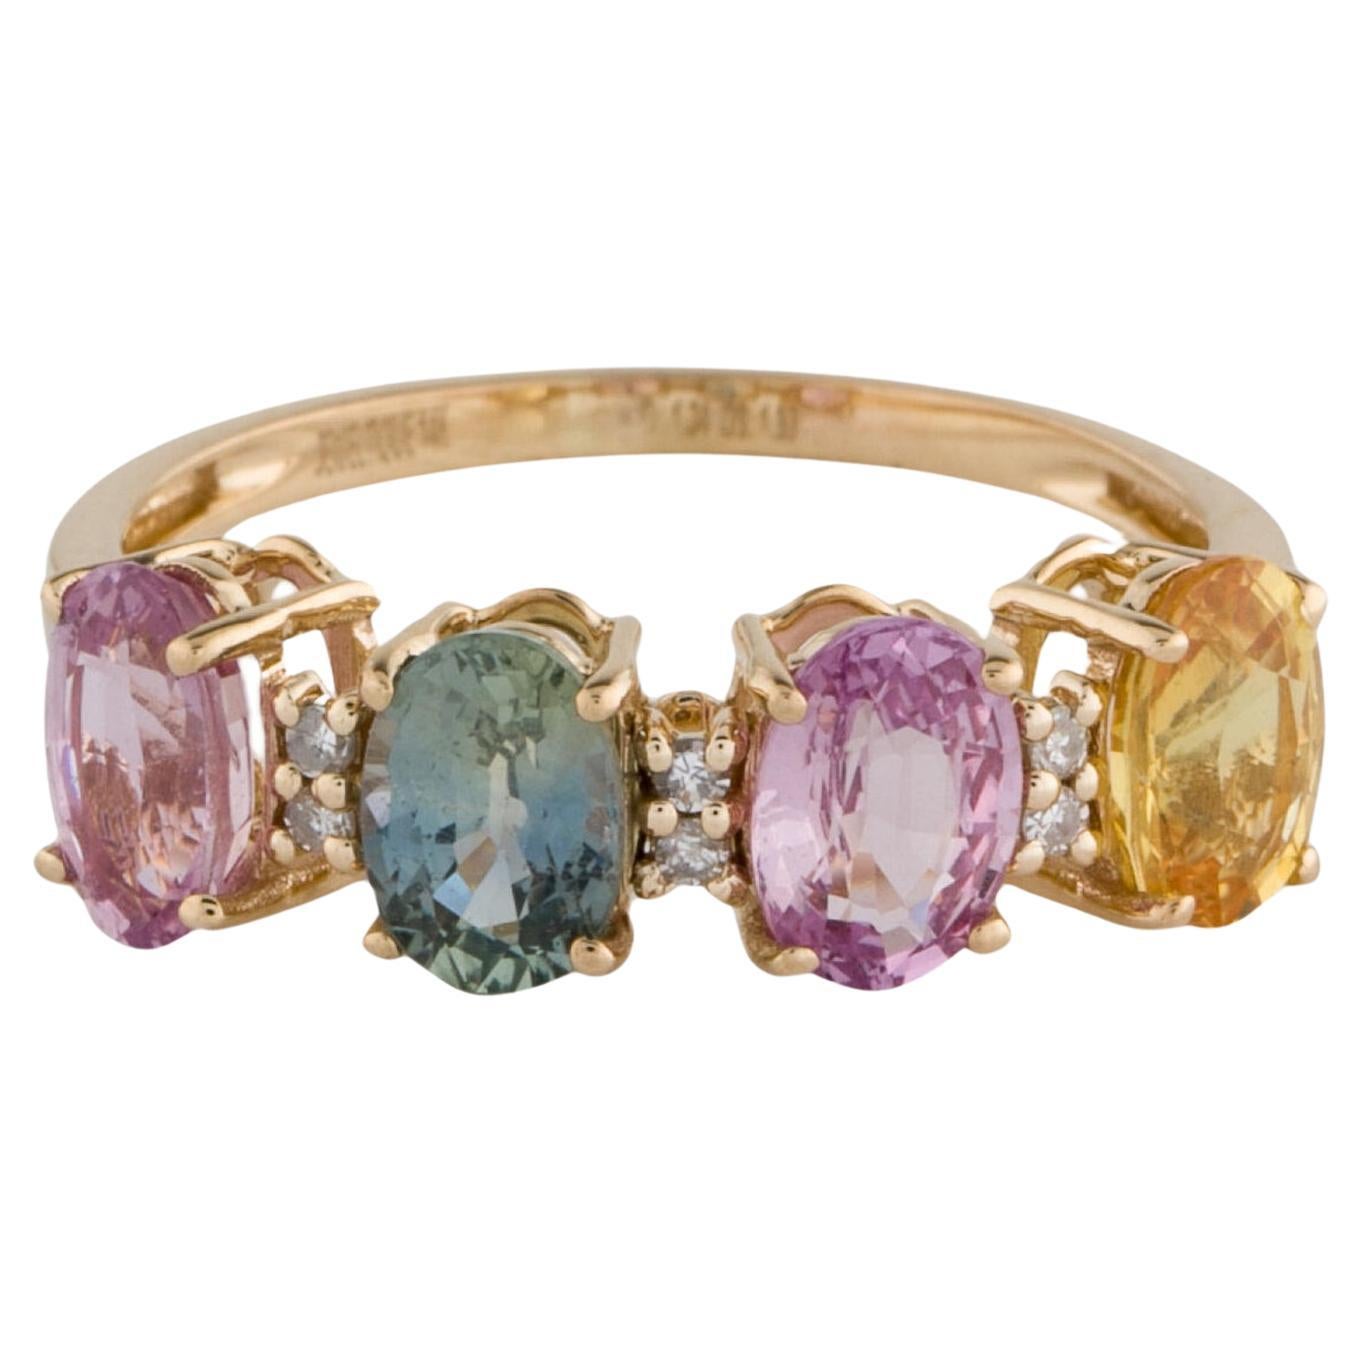 Exquisite 14K Sapphire & Diamond Ring - Size 7 - Elegant Statement Jewelry For Sale